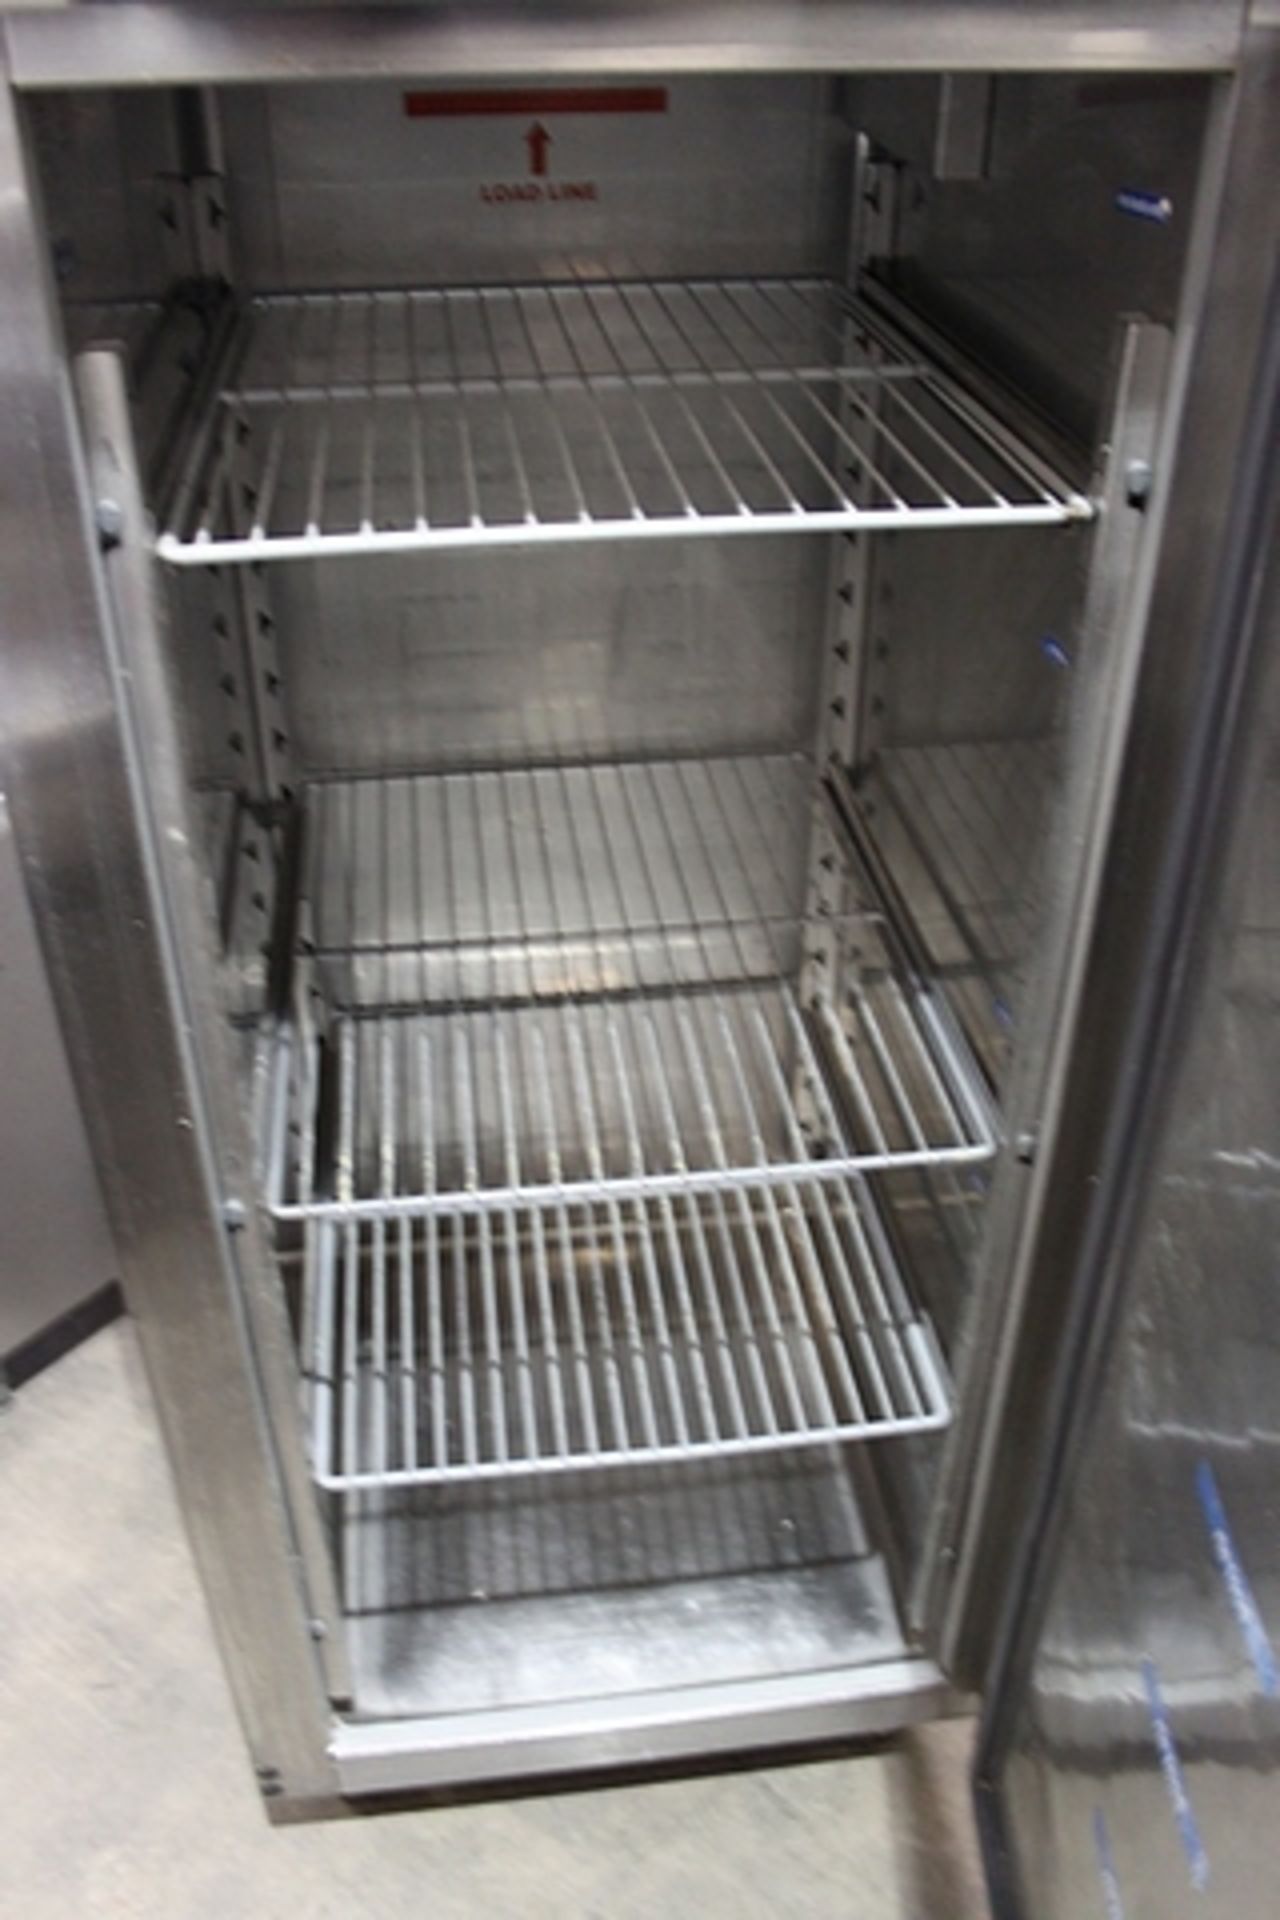 Williams Refrigeration HG1TSS vertical stainless steel refrigerator temperature range +1/+4°C GP 467 - Image 2 of 2